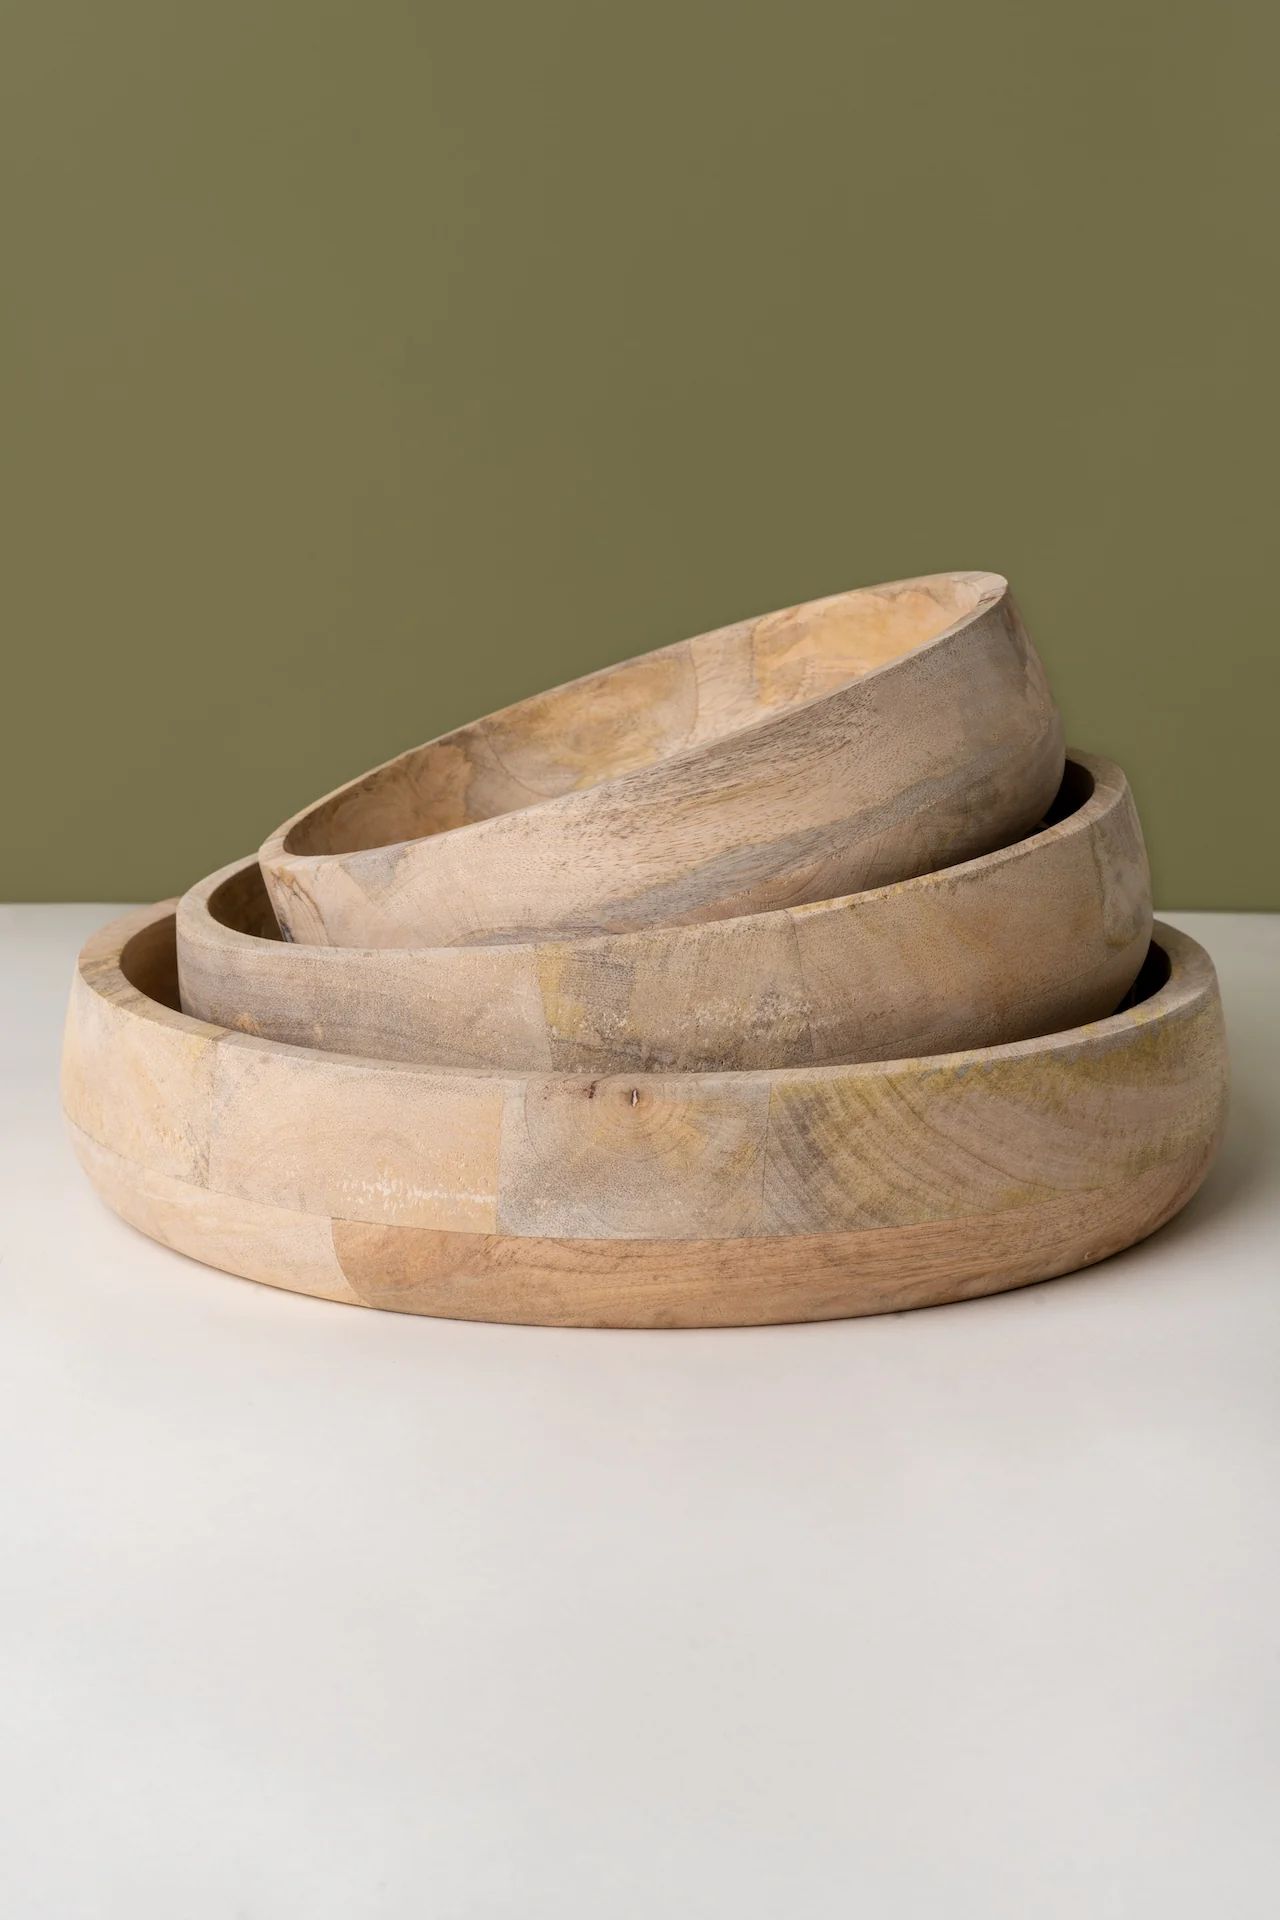 Raw Natural Mango Wood Serving Bowls, Set of 3 | Joy Meets Home